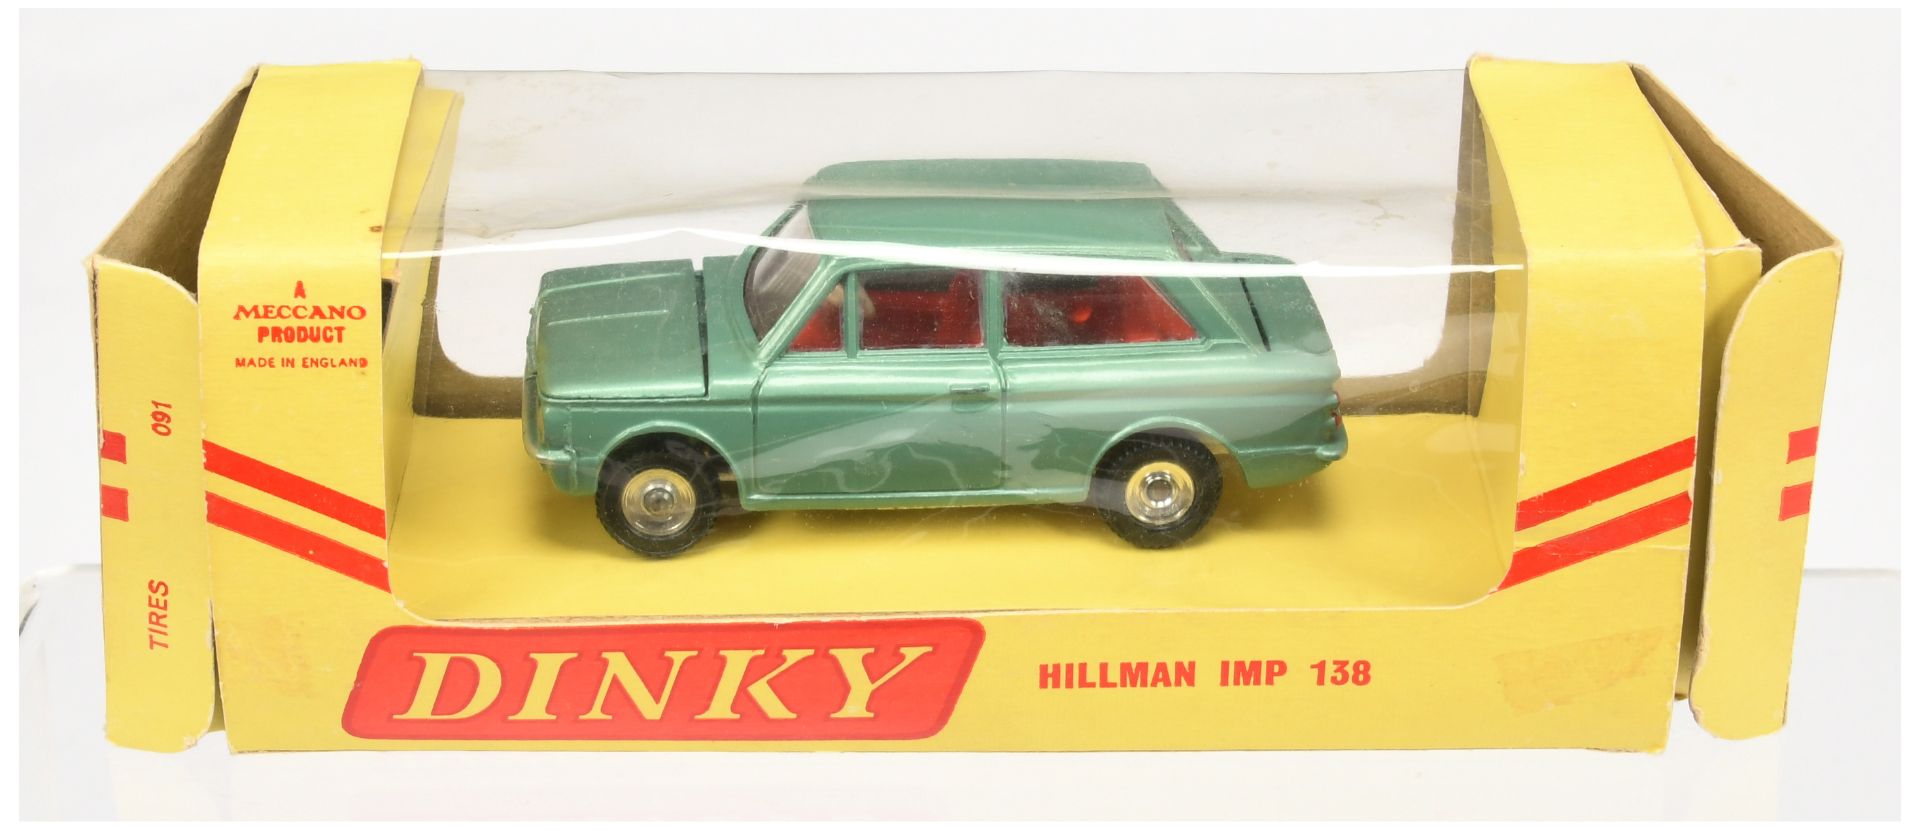 Dinky 138 Hillman Imp.